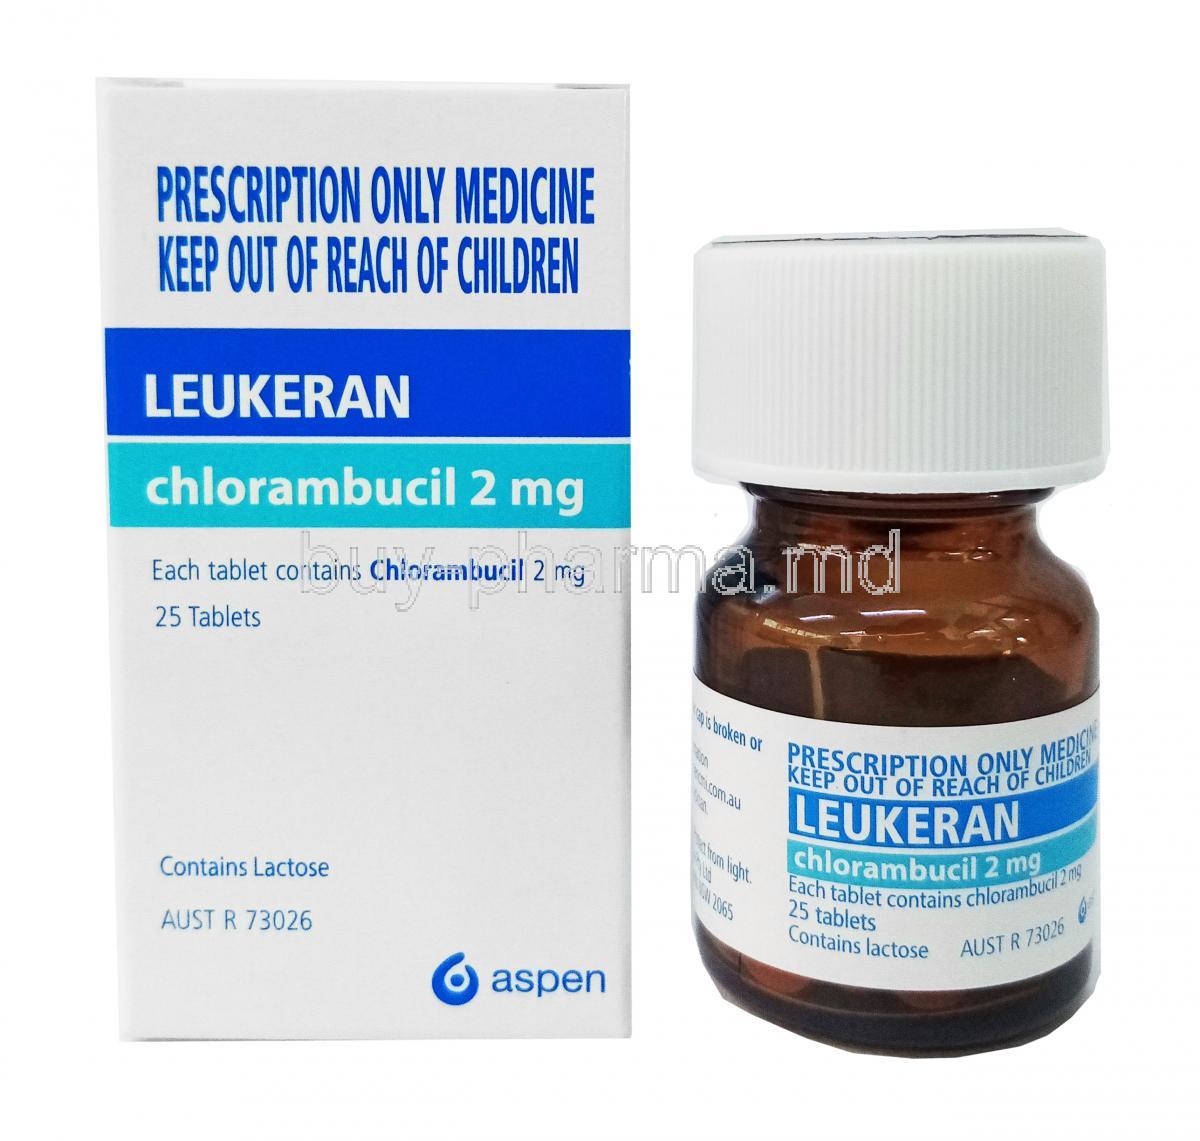 Leukeran, Chlorambucil 2mg box and tablets